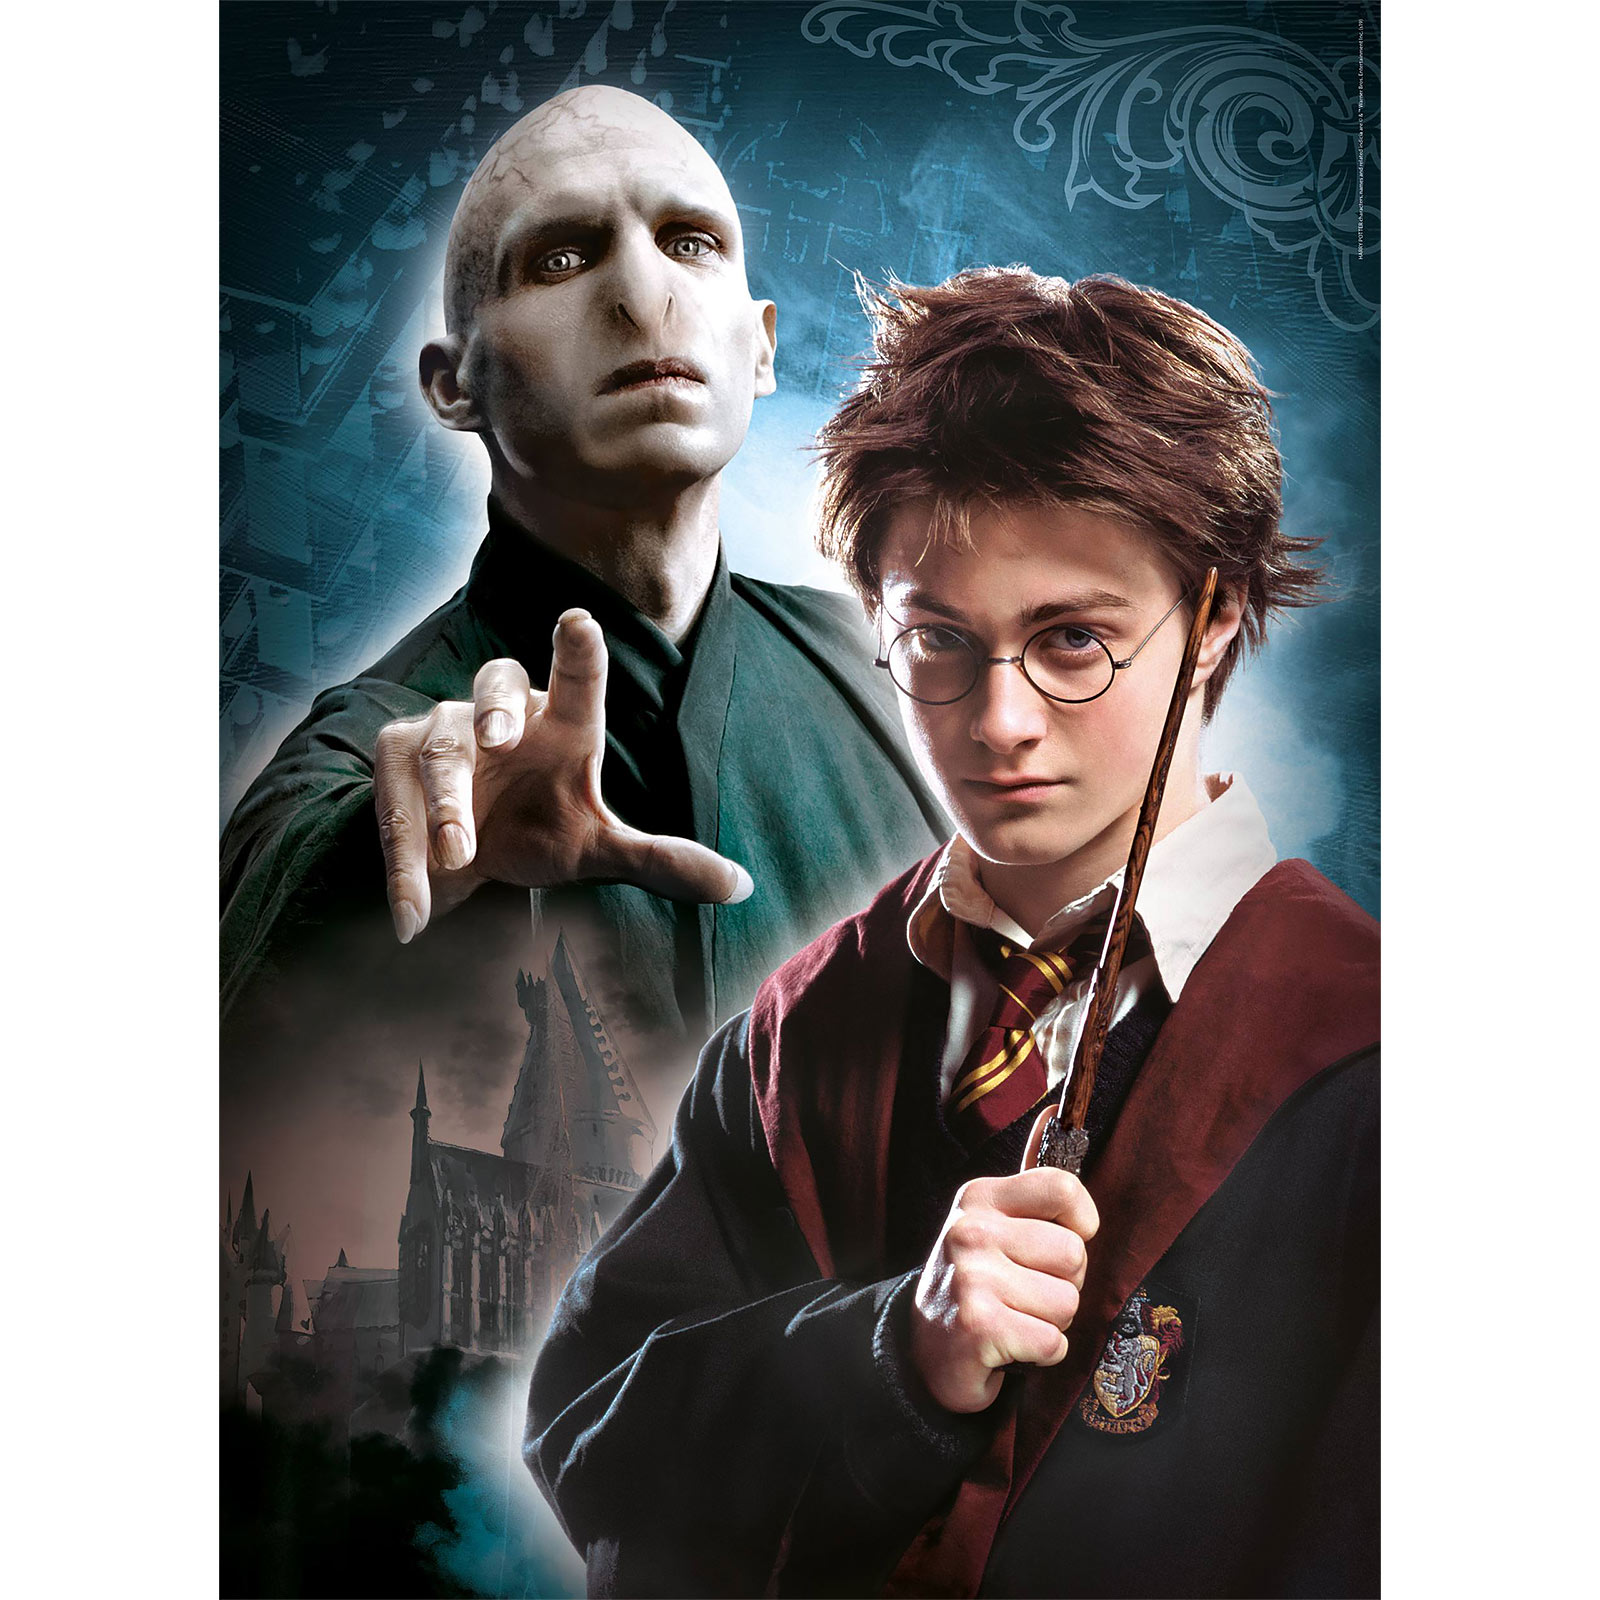 Harry Potter - Characters Puzzle 3er Set